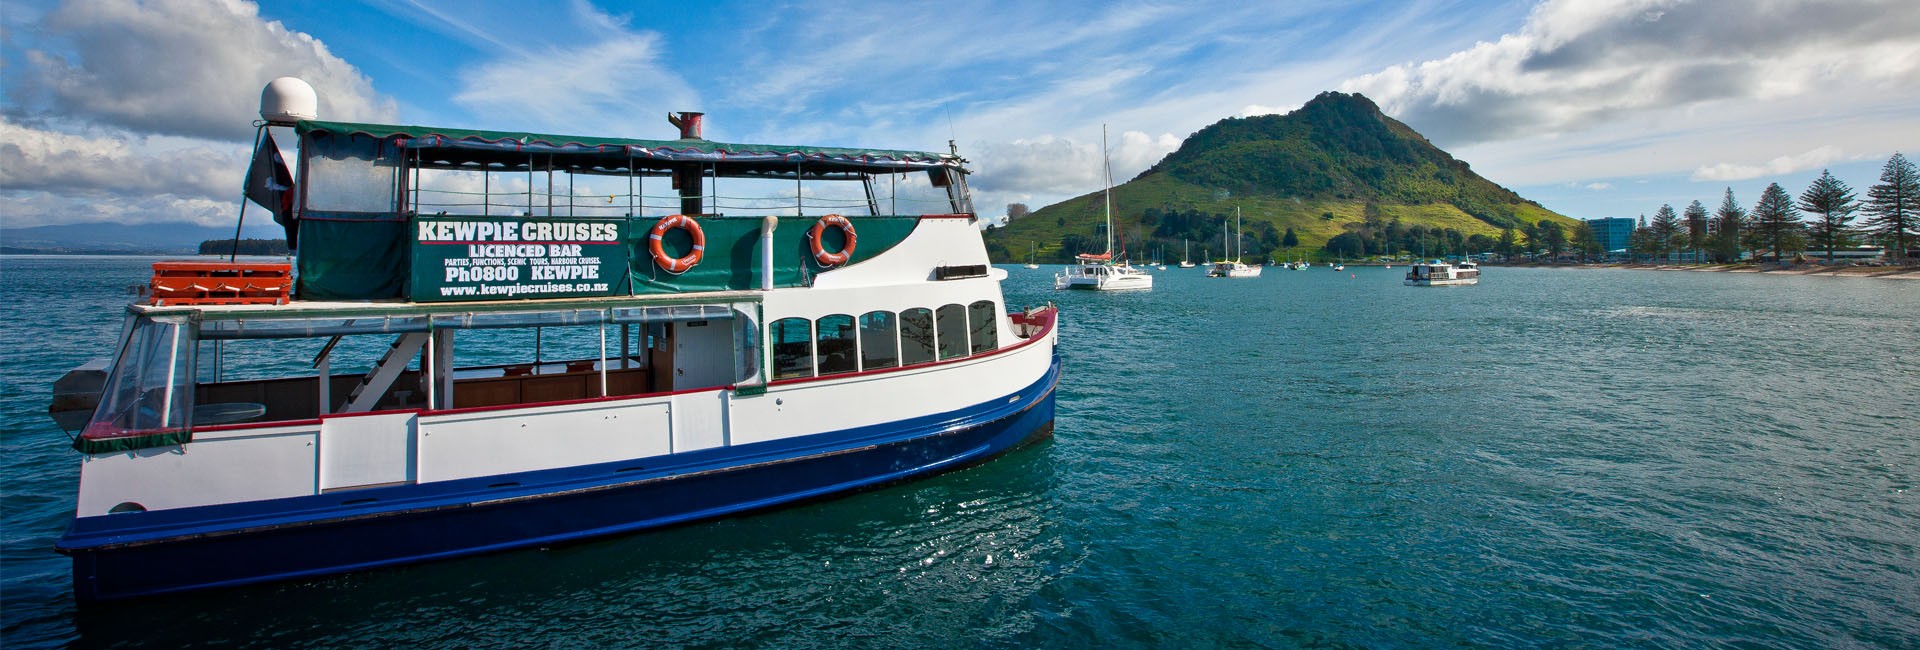 Join Tauranga Locals on the Iconic Kewpie Taurangas Original Cruise Boat